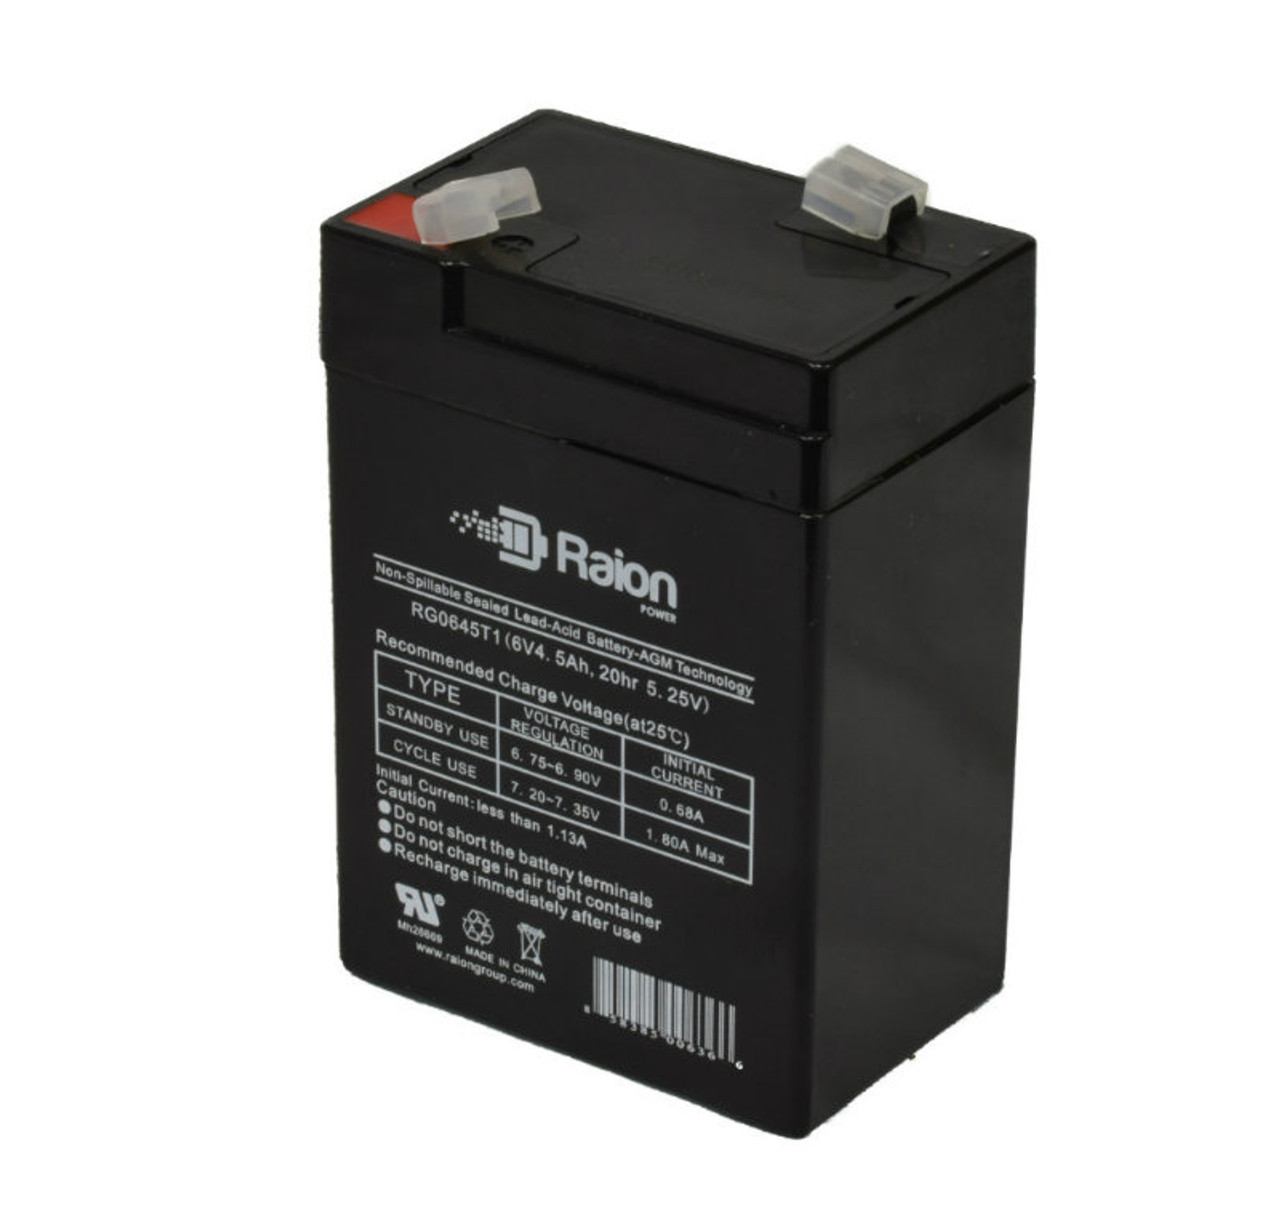 Raion Power RG0645T1 6V 4.5Ah Replacement Battery Cartridge for Sonnenschein A206/3.8SK